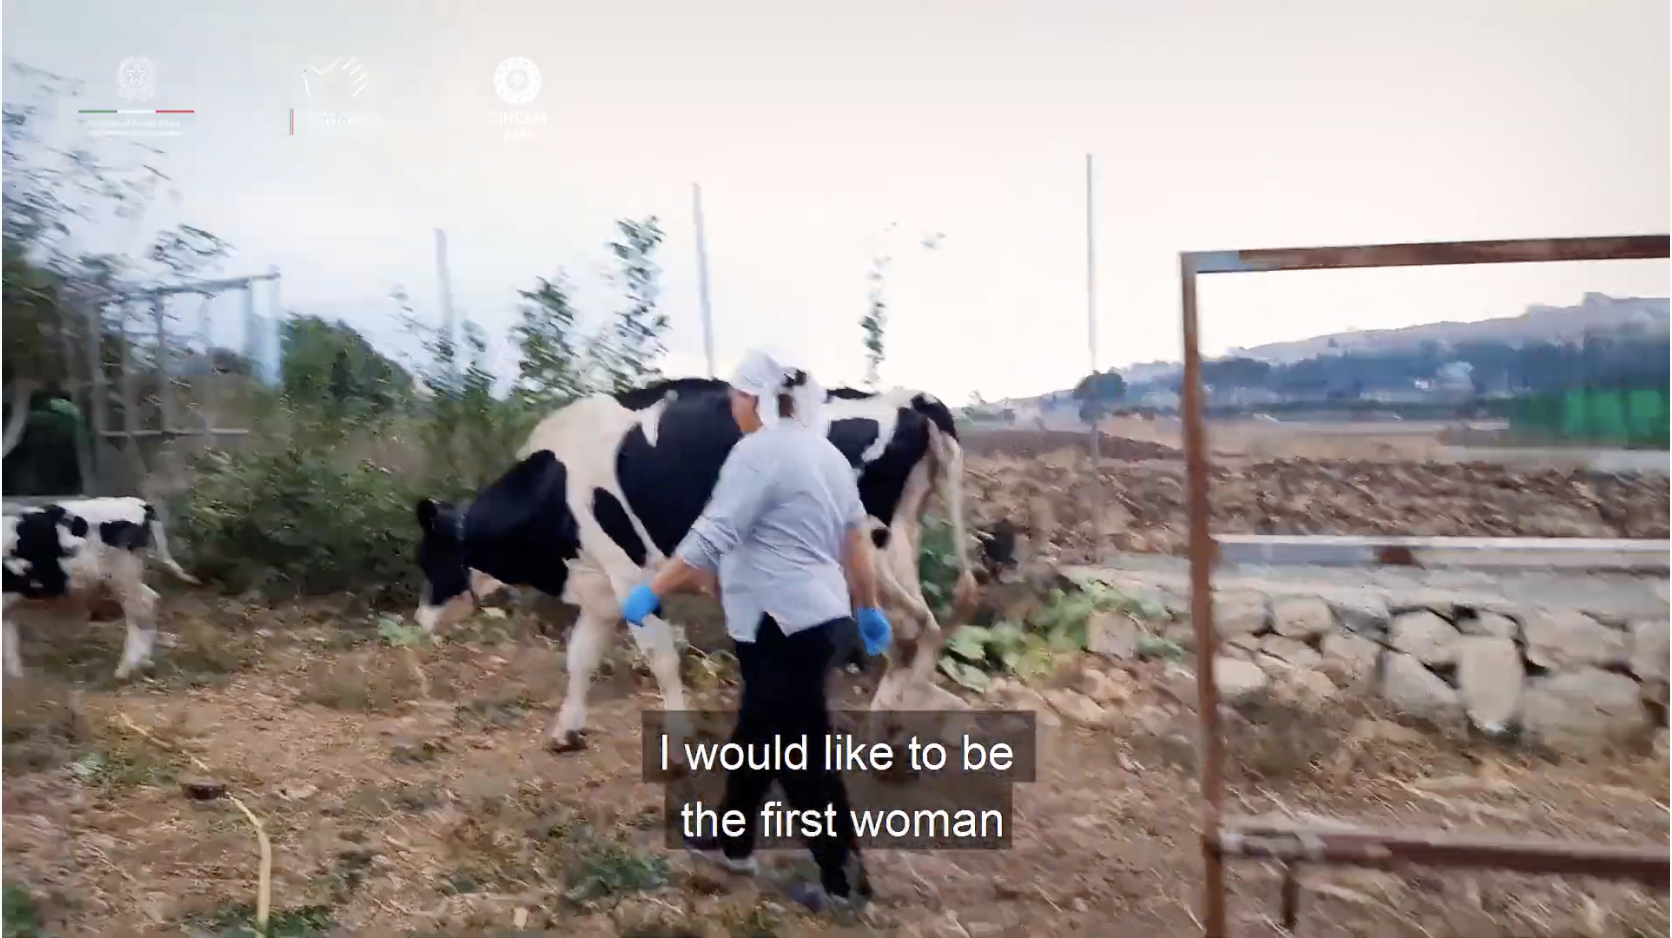 Rural women and sustainable rural development